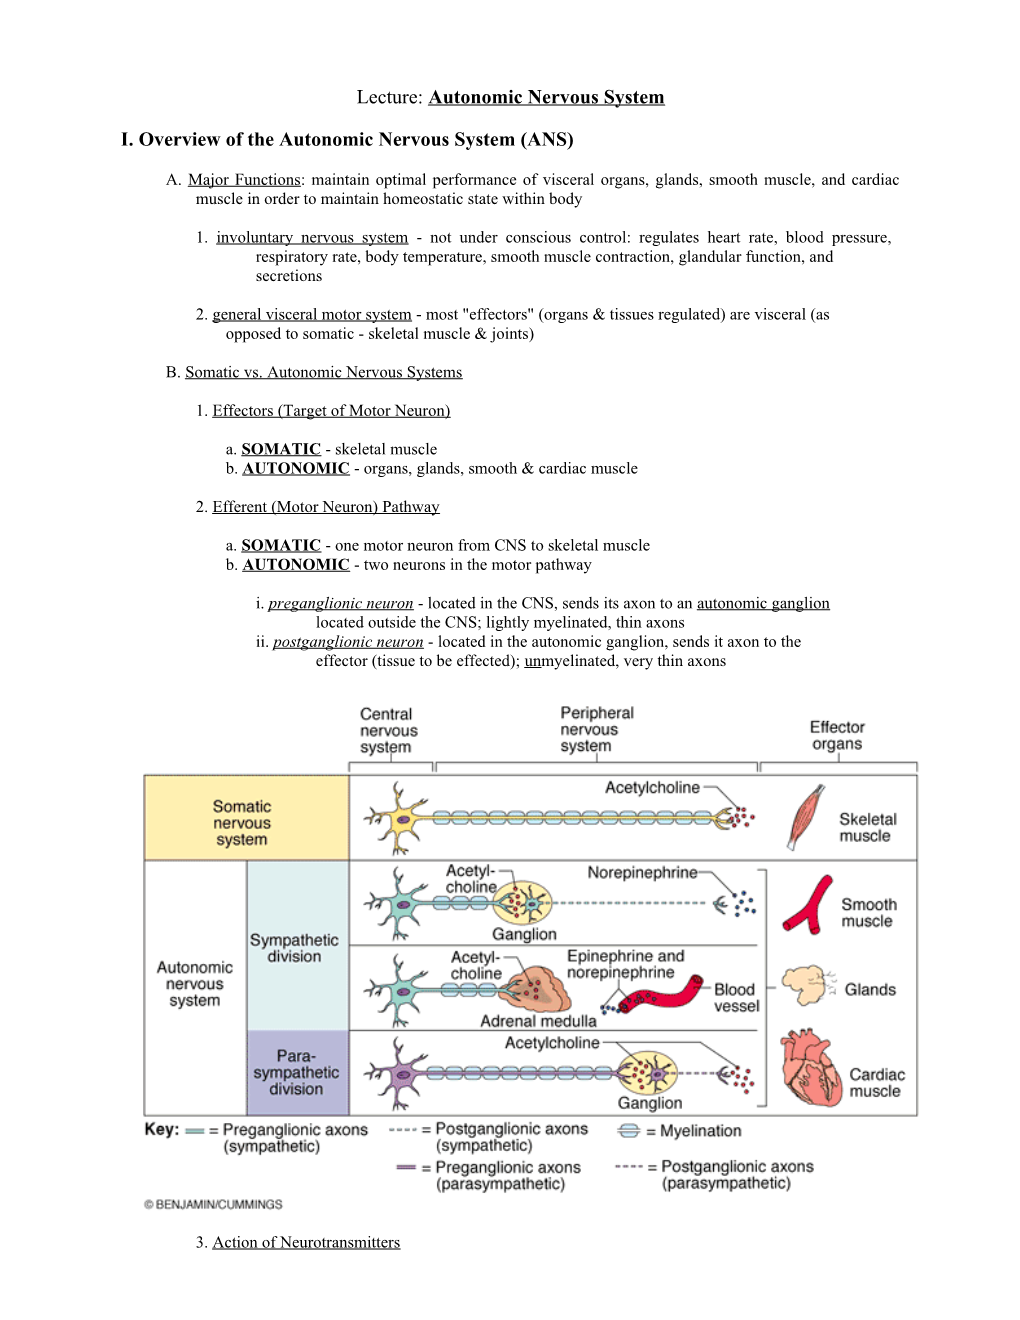 I. Overview of the Autonomic Nervous System (ANS)